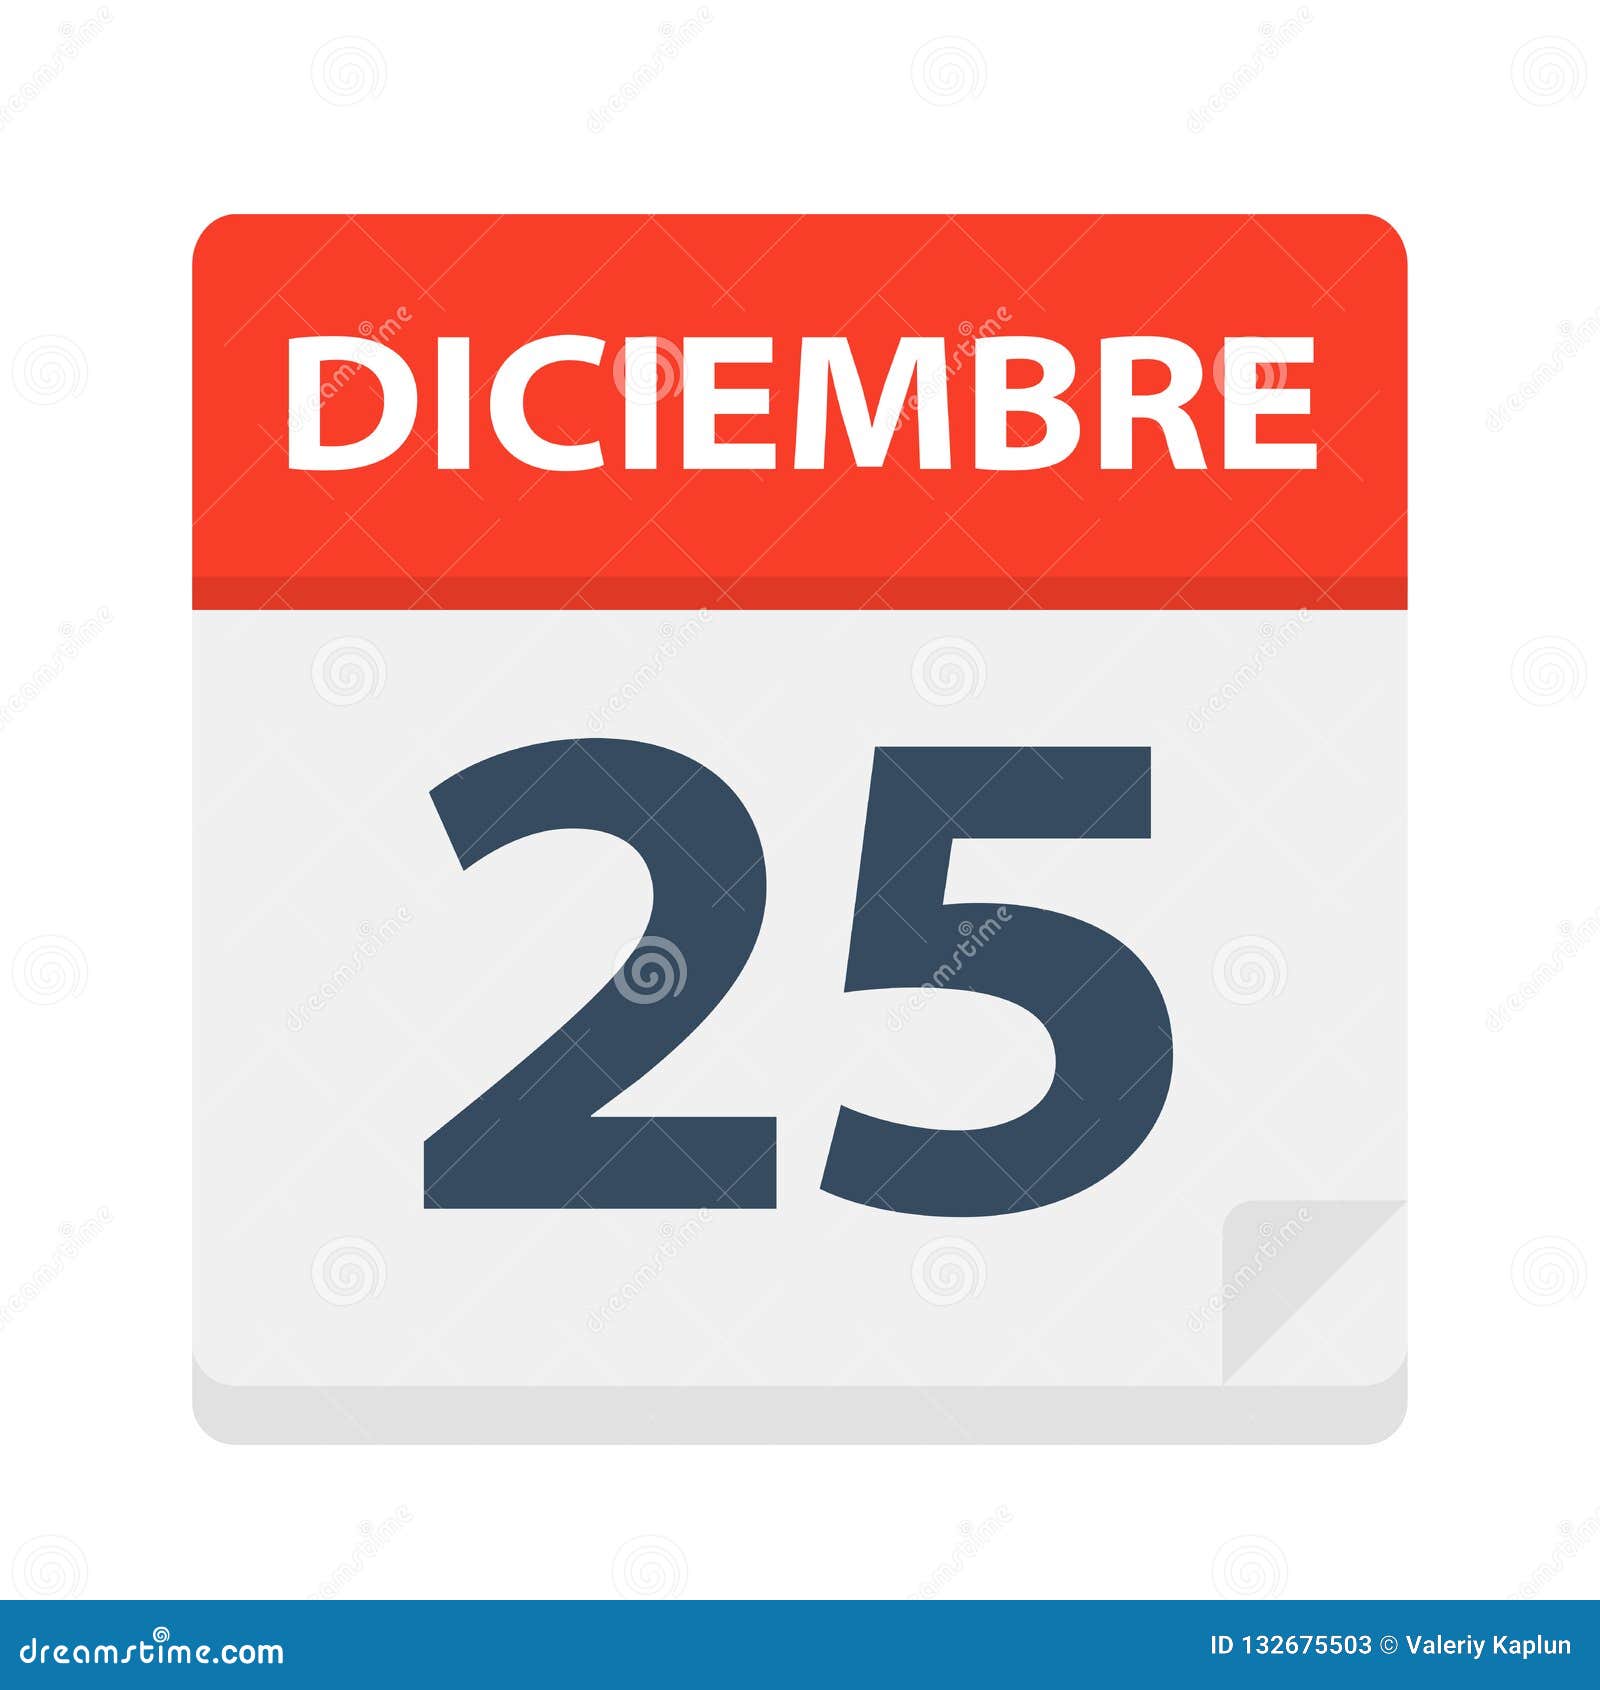 diciembre 25 - calendar icon - december 25.   of spanish calendar leaf